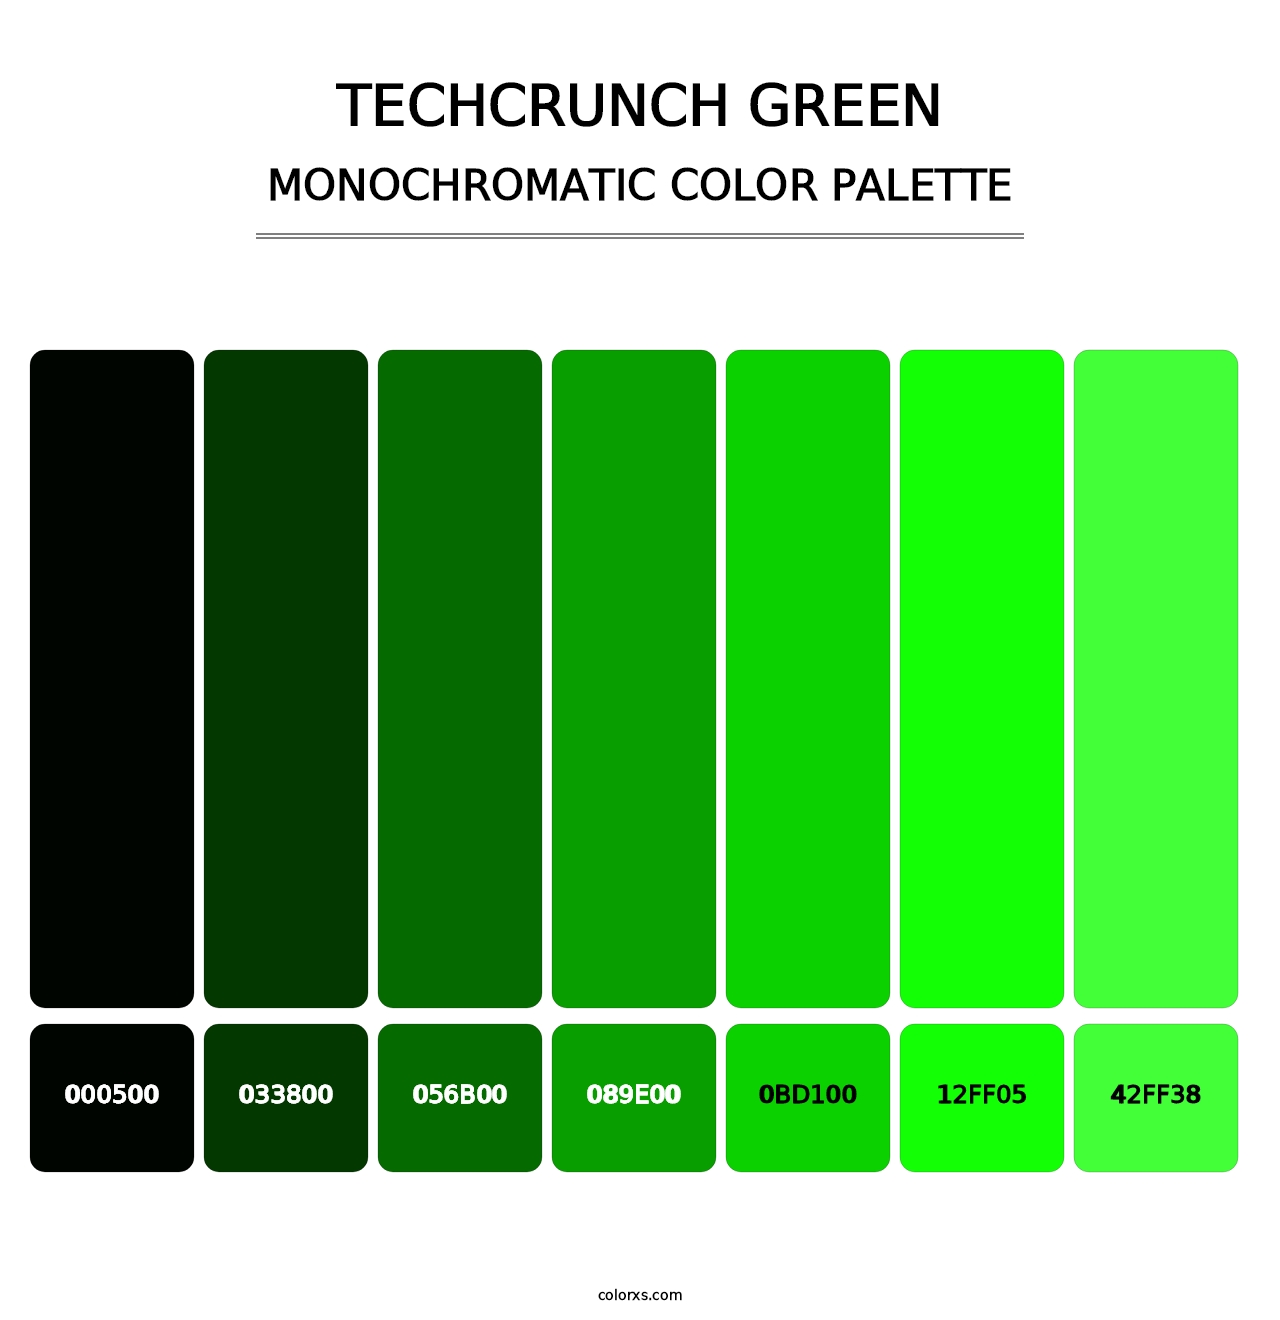 TechCrunch Green - Monochromatic Color Palette